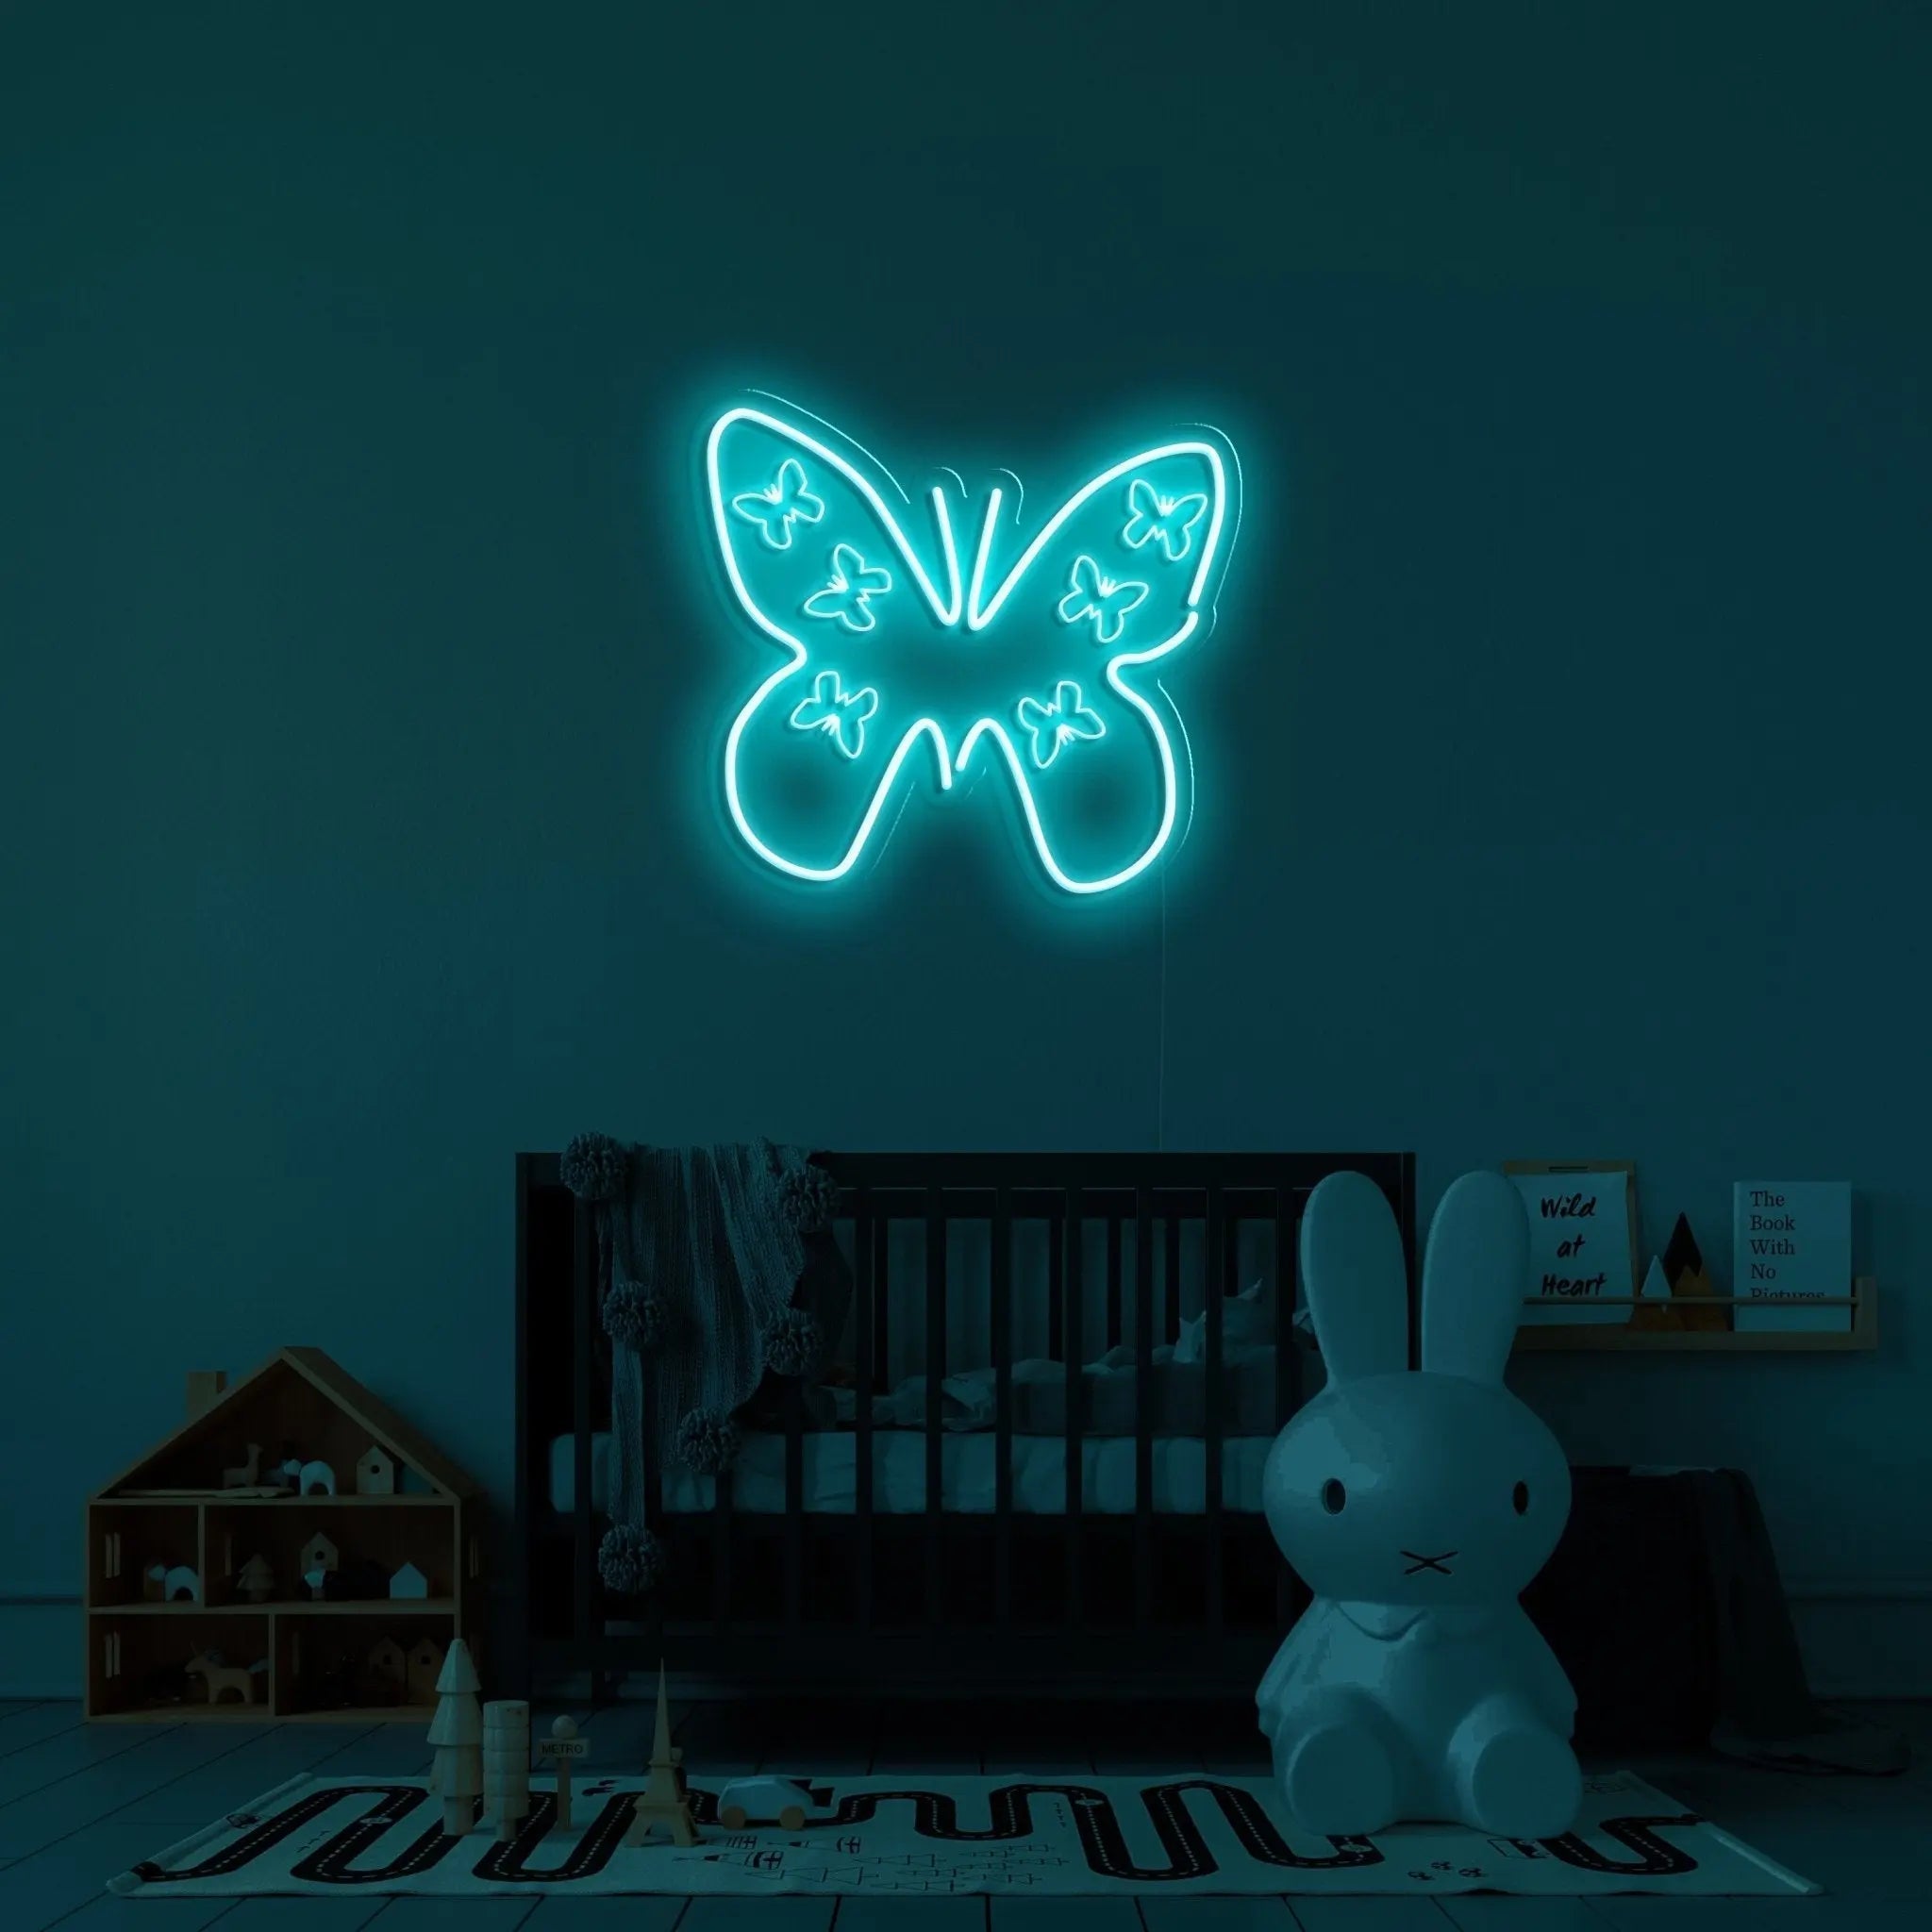 'Butterfly' Neon Sign - neonaffair